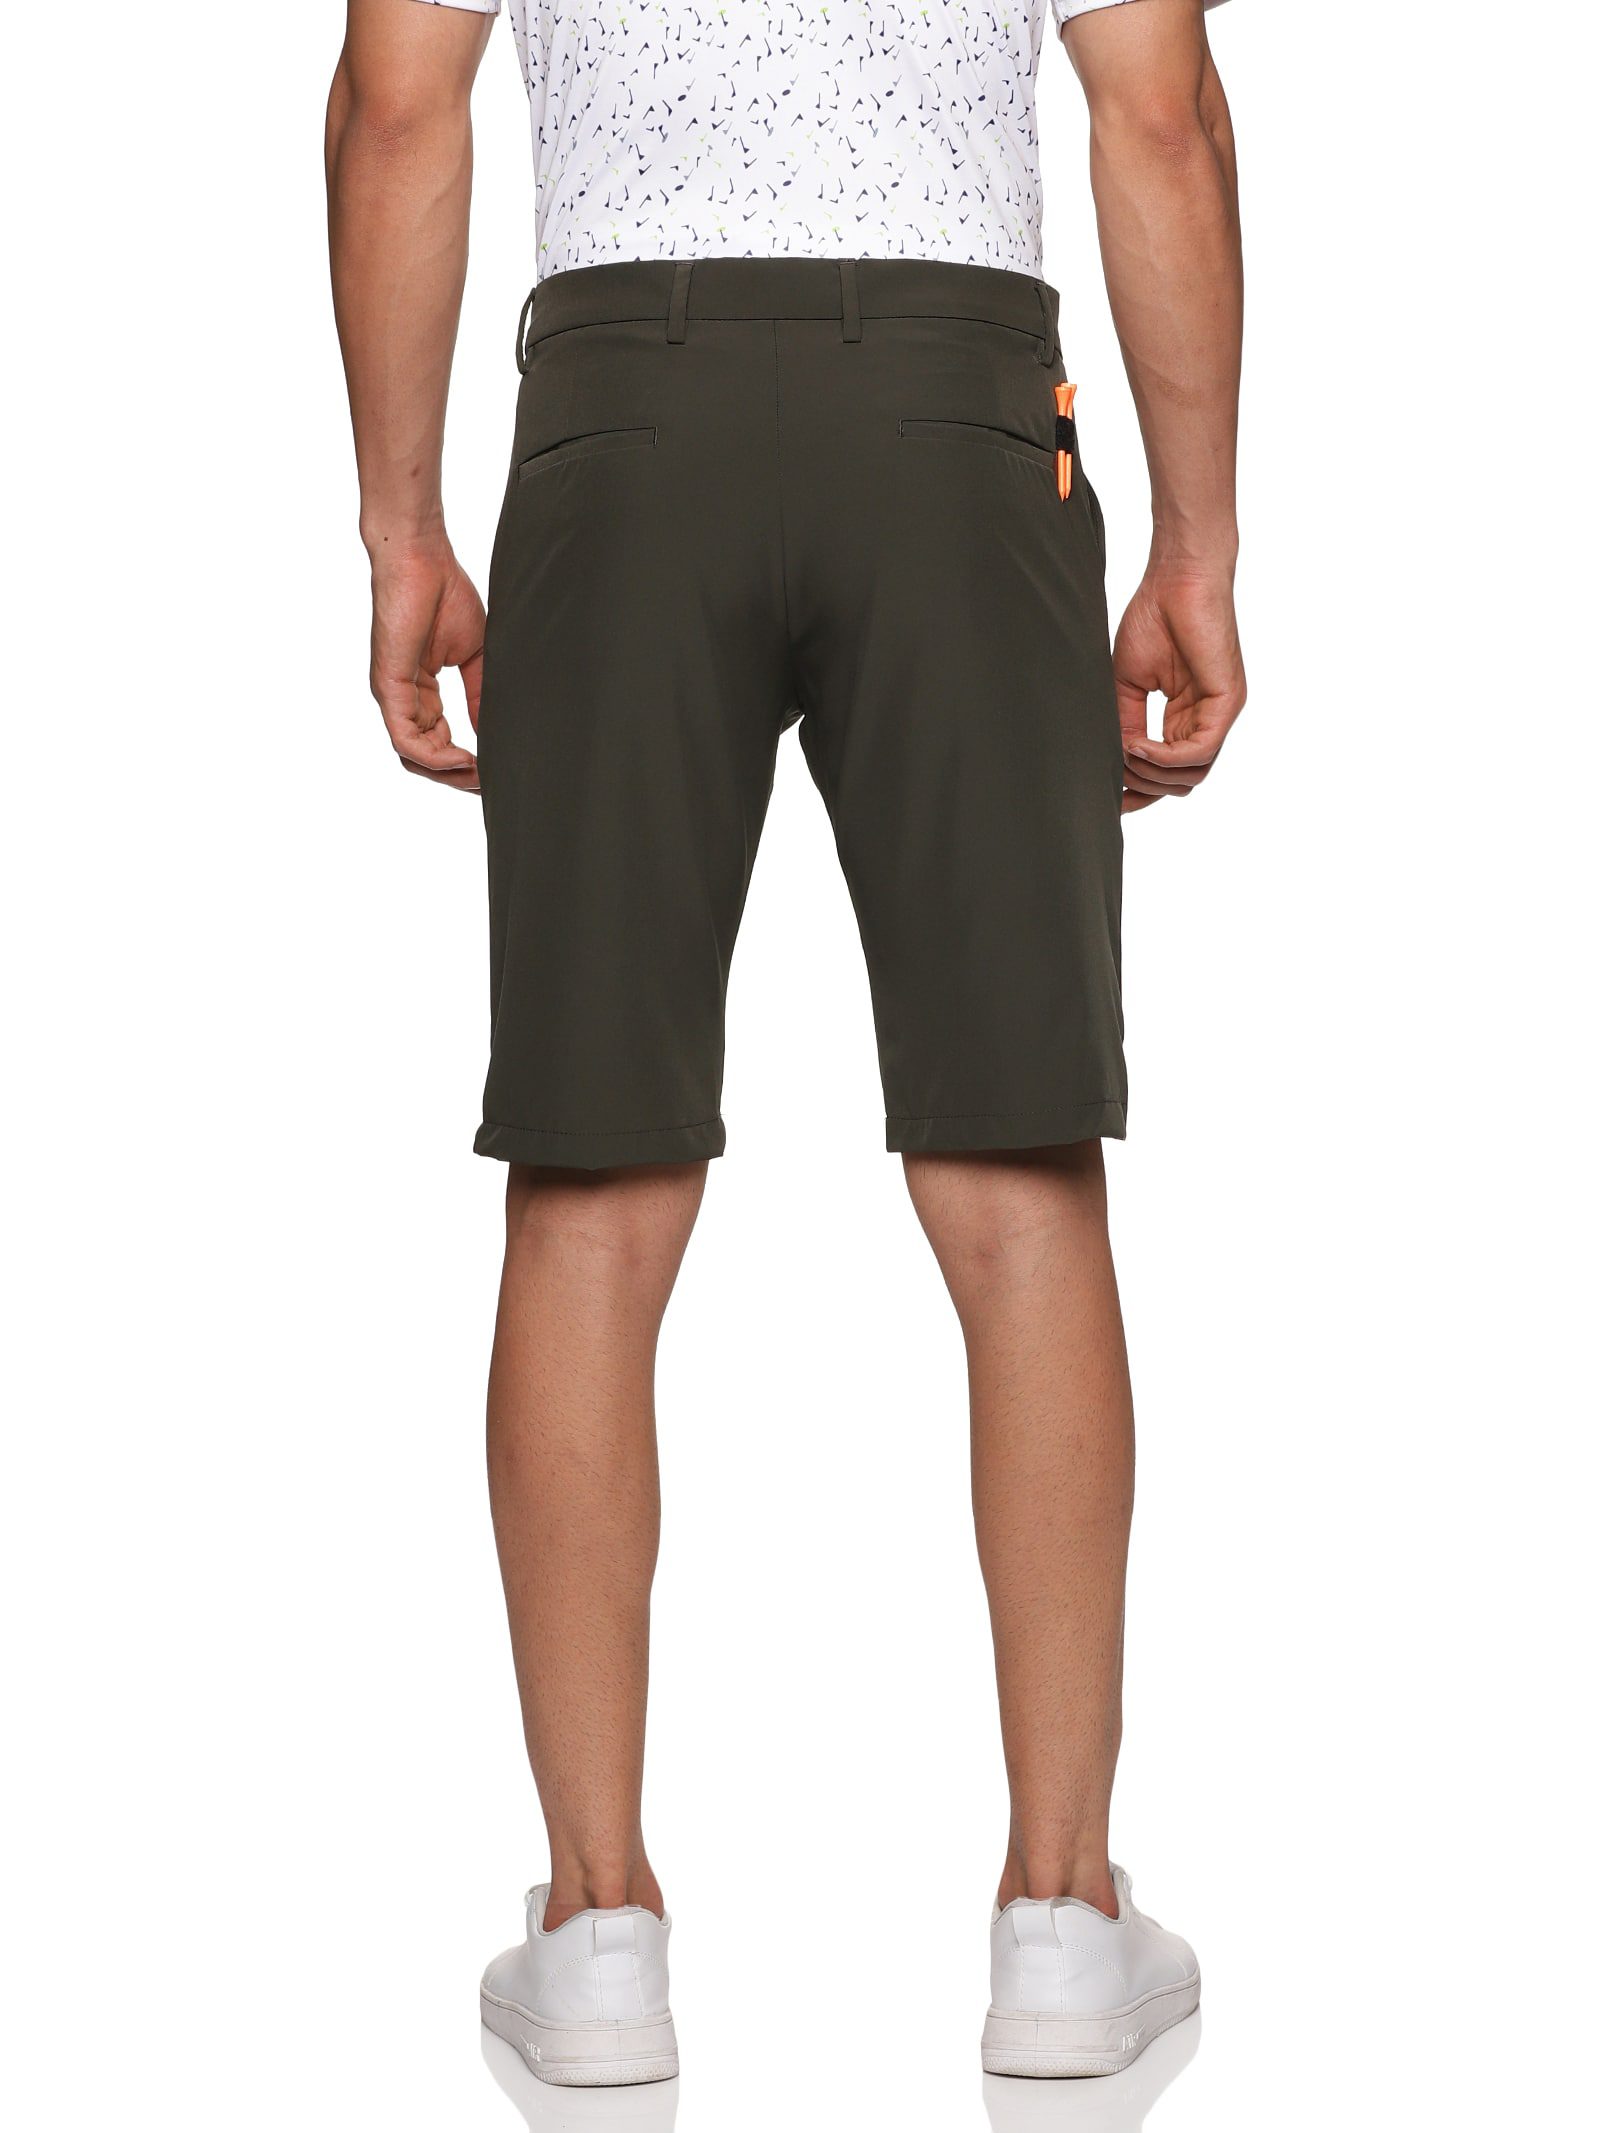 Clearance-sale Golf Shorts Men Men's Directional Sign Work Shorts Mid-waist  No Belt Multi-pocket Five-piece Pants Casual Shorts Pants Slim Fit Half Shorts  Cargo Shorts ,Army Green,XL 